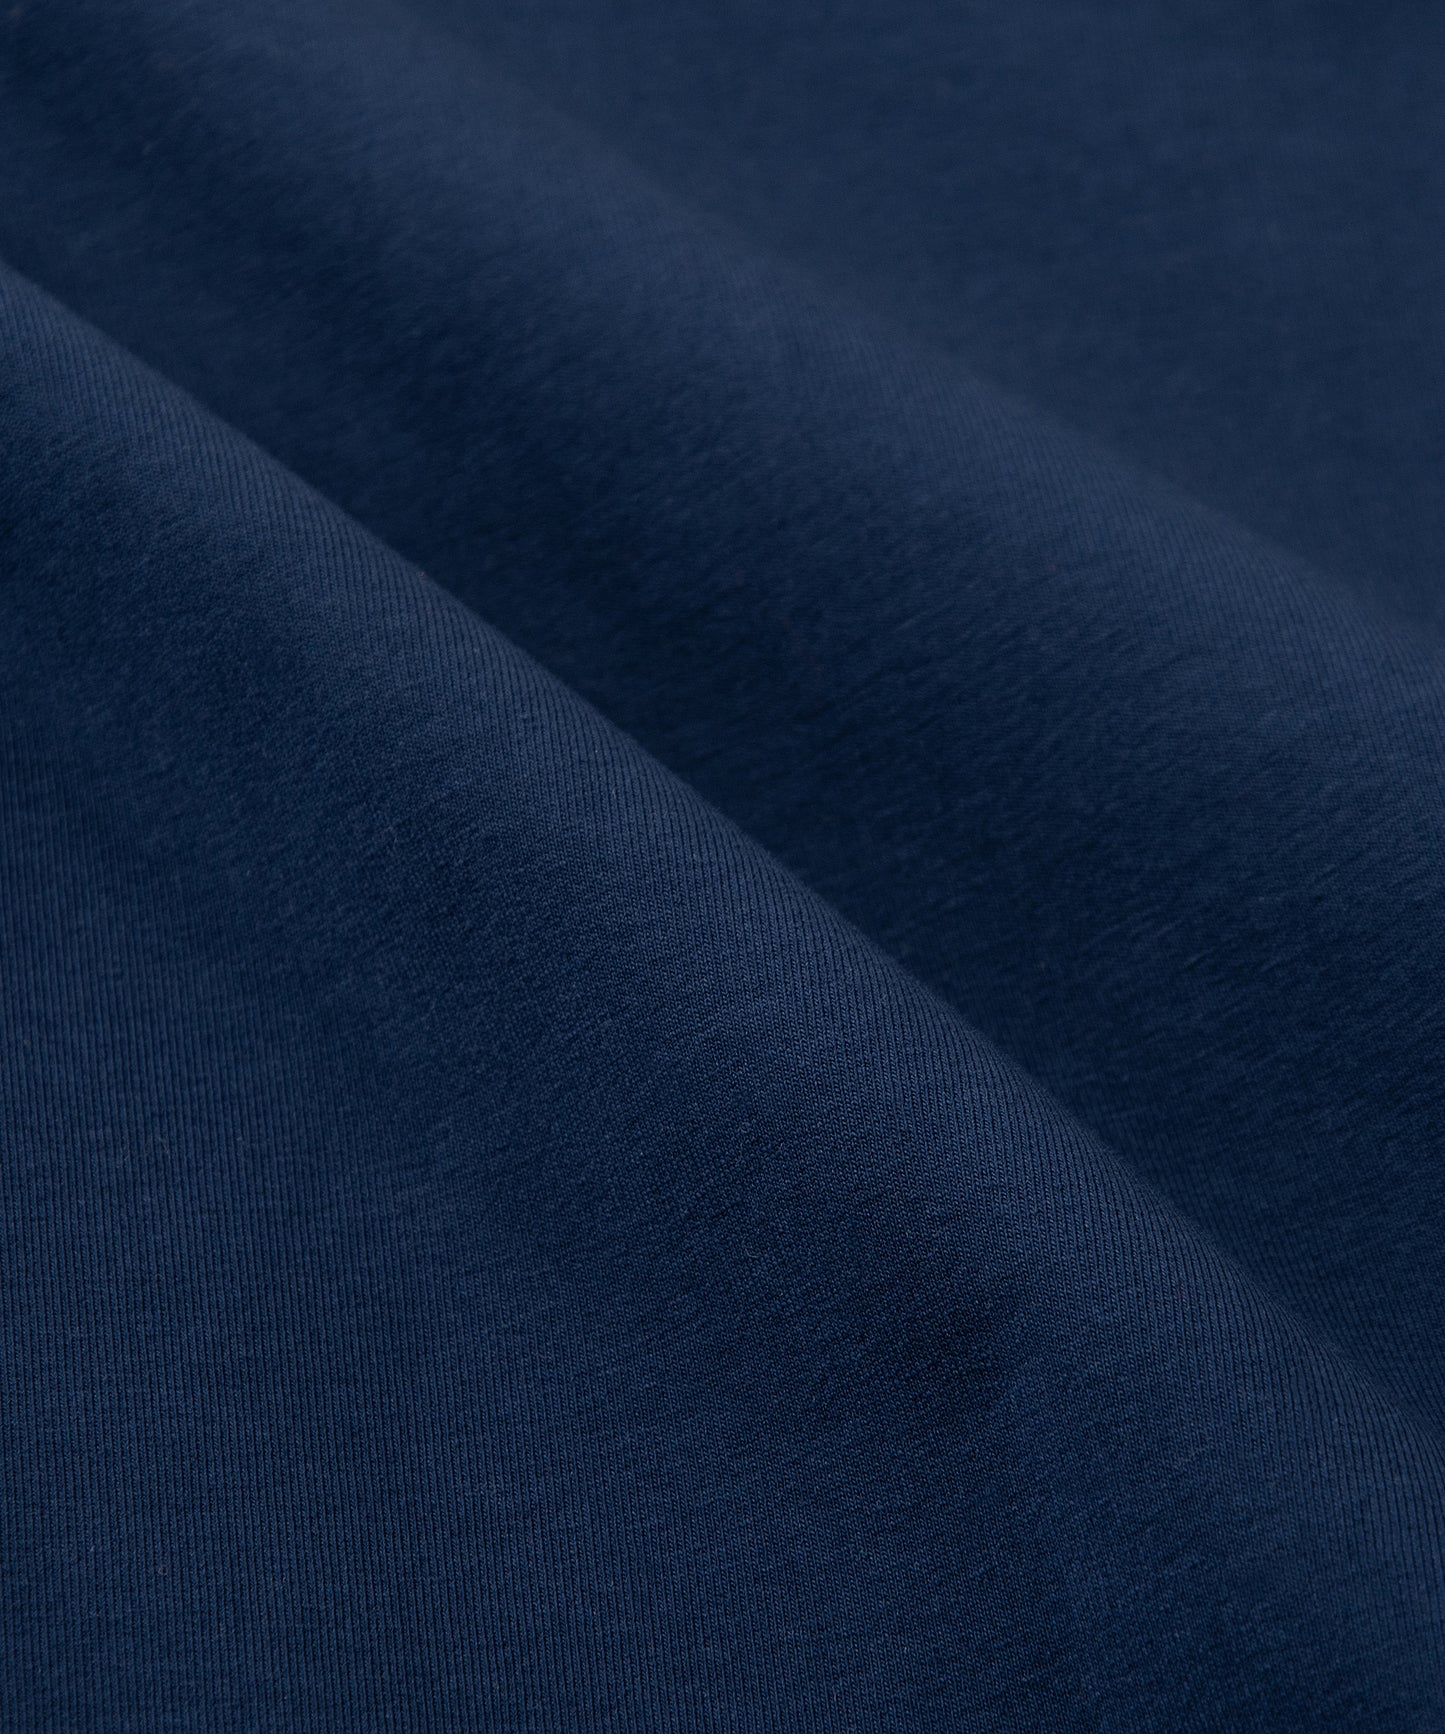 CUSTOM_ALT_TEXT: Fabric closeup on Paper Planes Chromatic Crewneck Sweatshirt color Naval Academy.